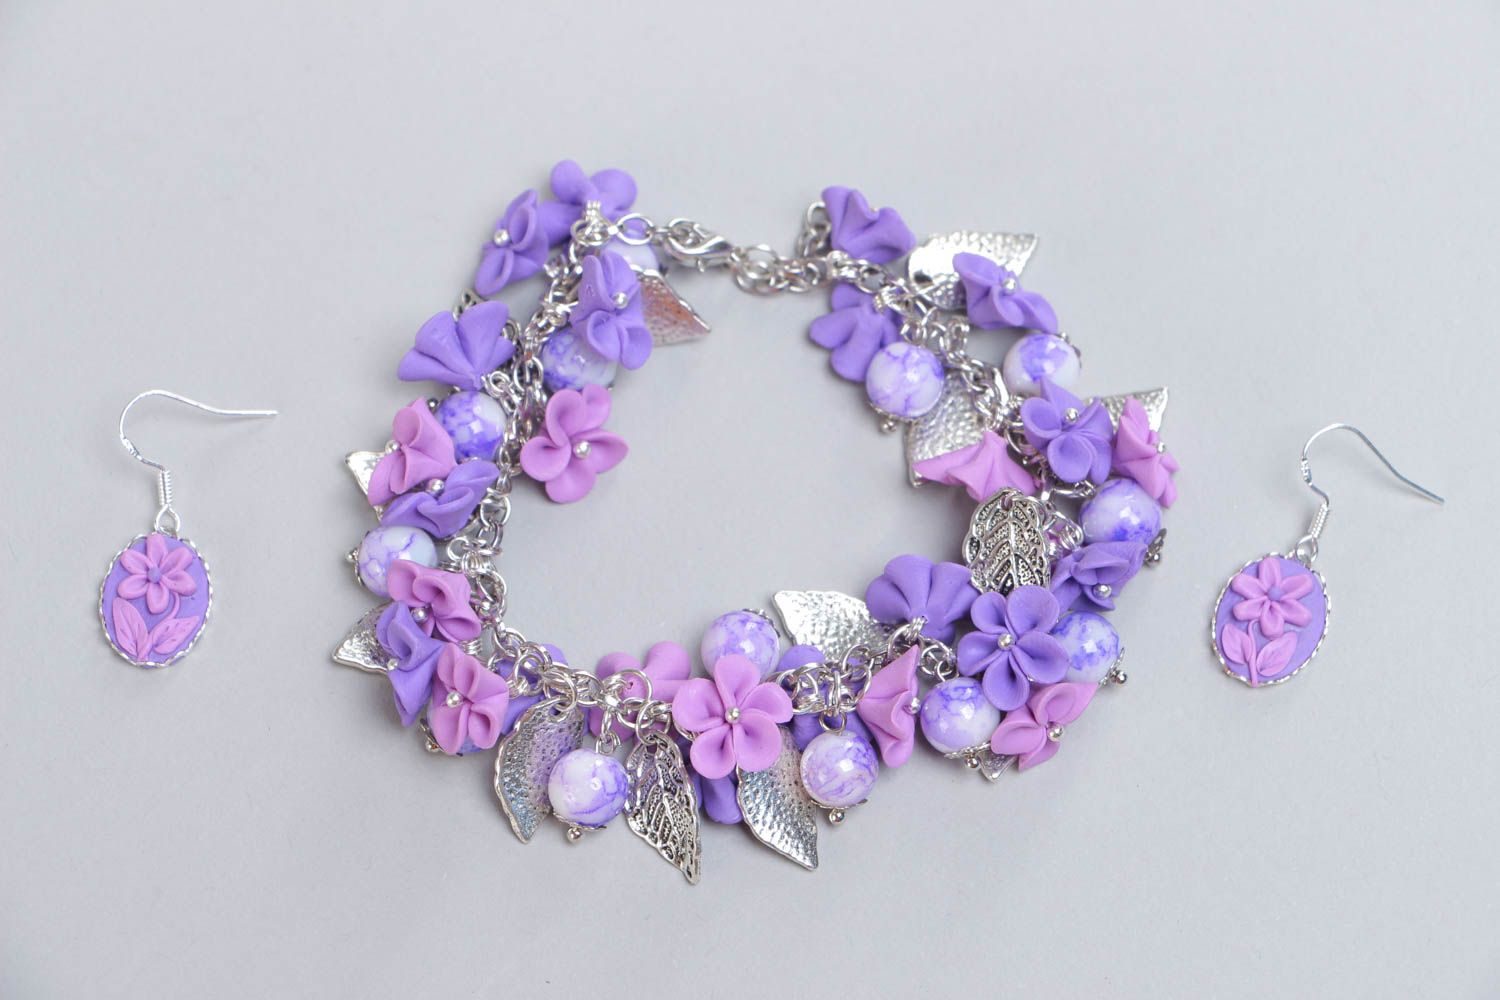 Chain violet flowers' bracelet with earrings for teen girl photo 2